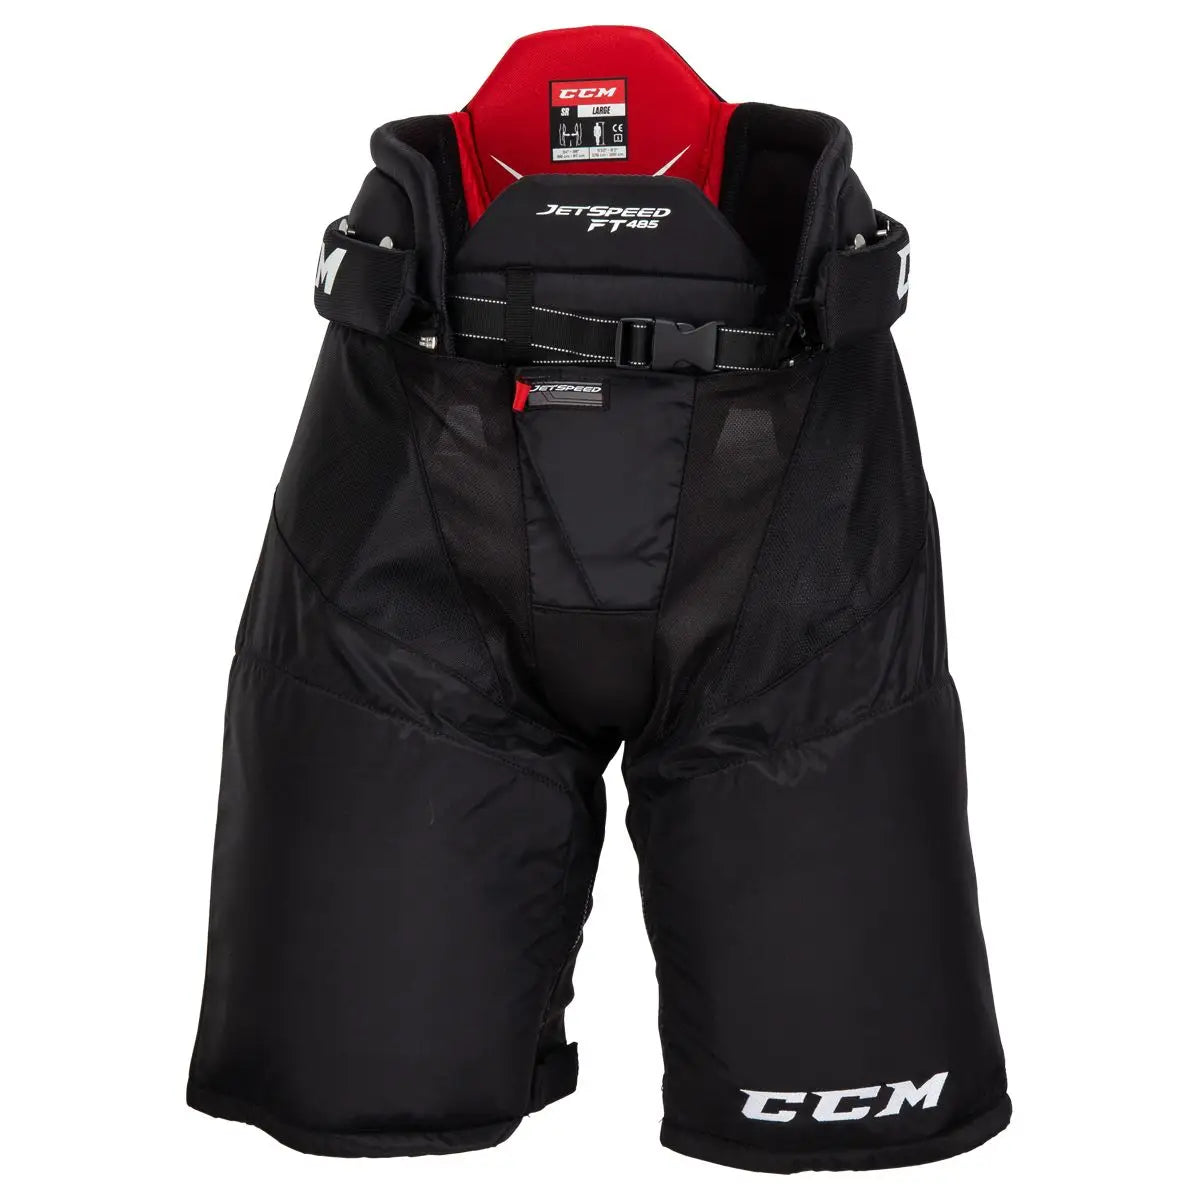 CCM Jetspeed FT485 Senior Hockey Pants Black